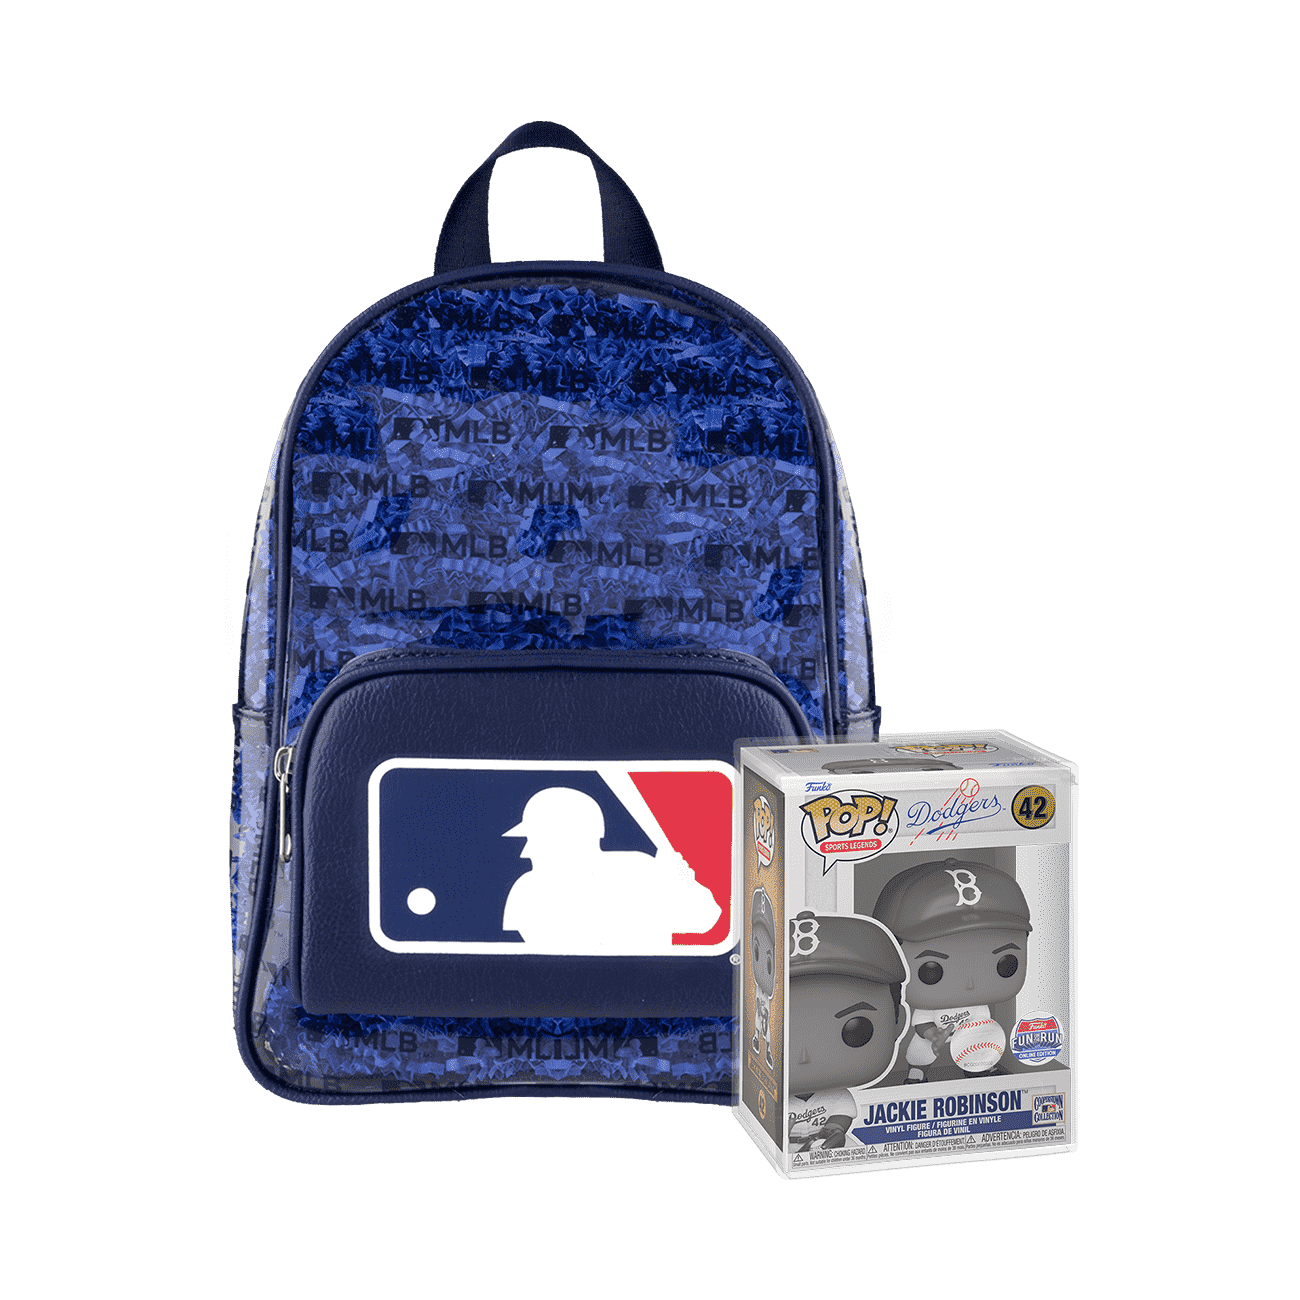 Customized Clear Dodger Stadium Bag